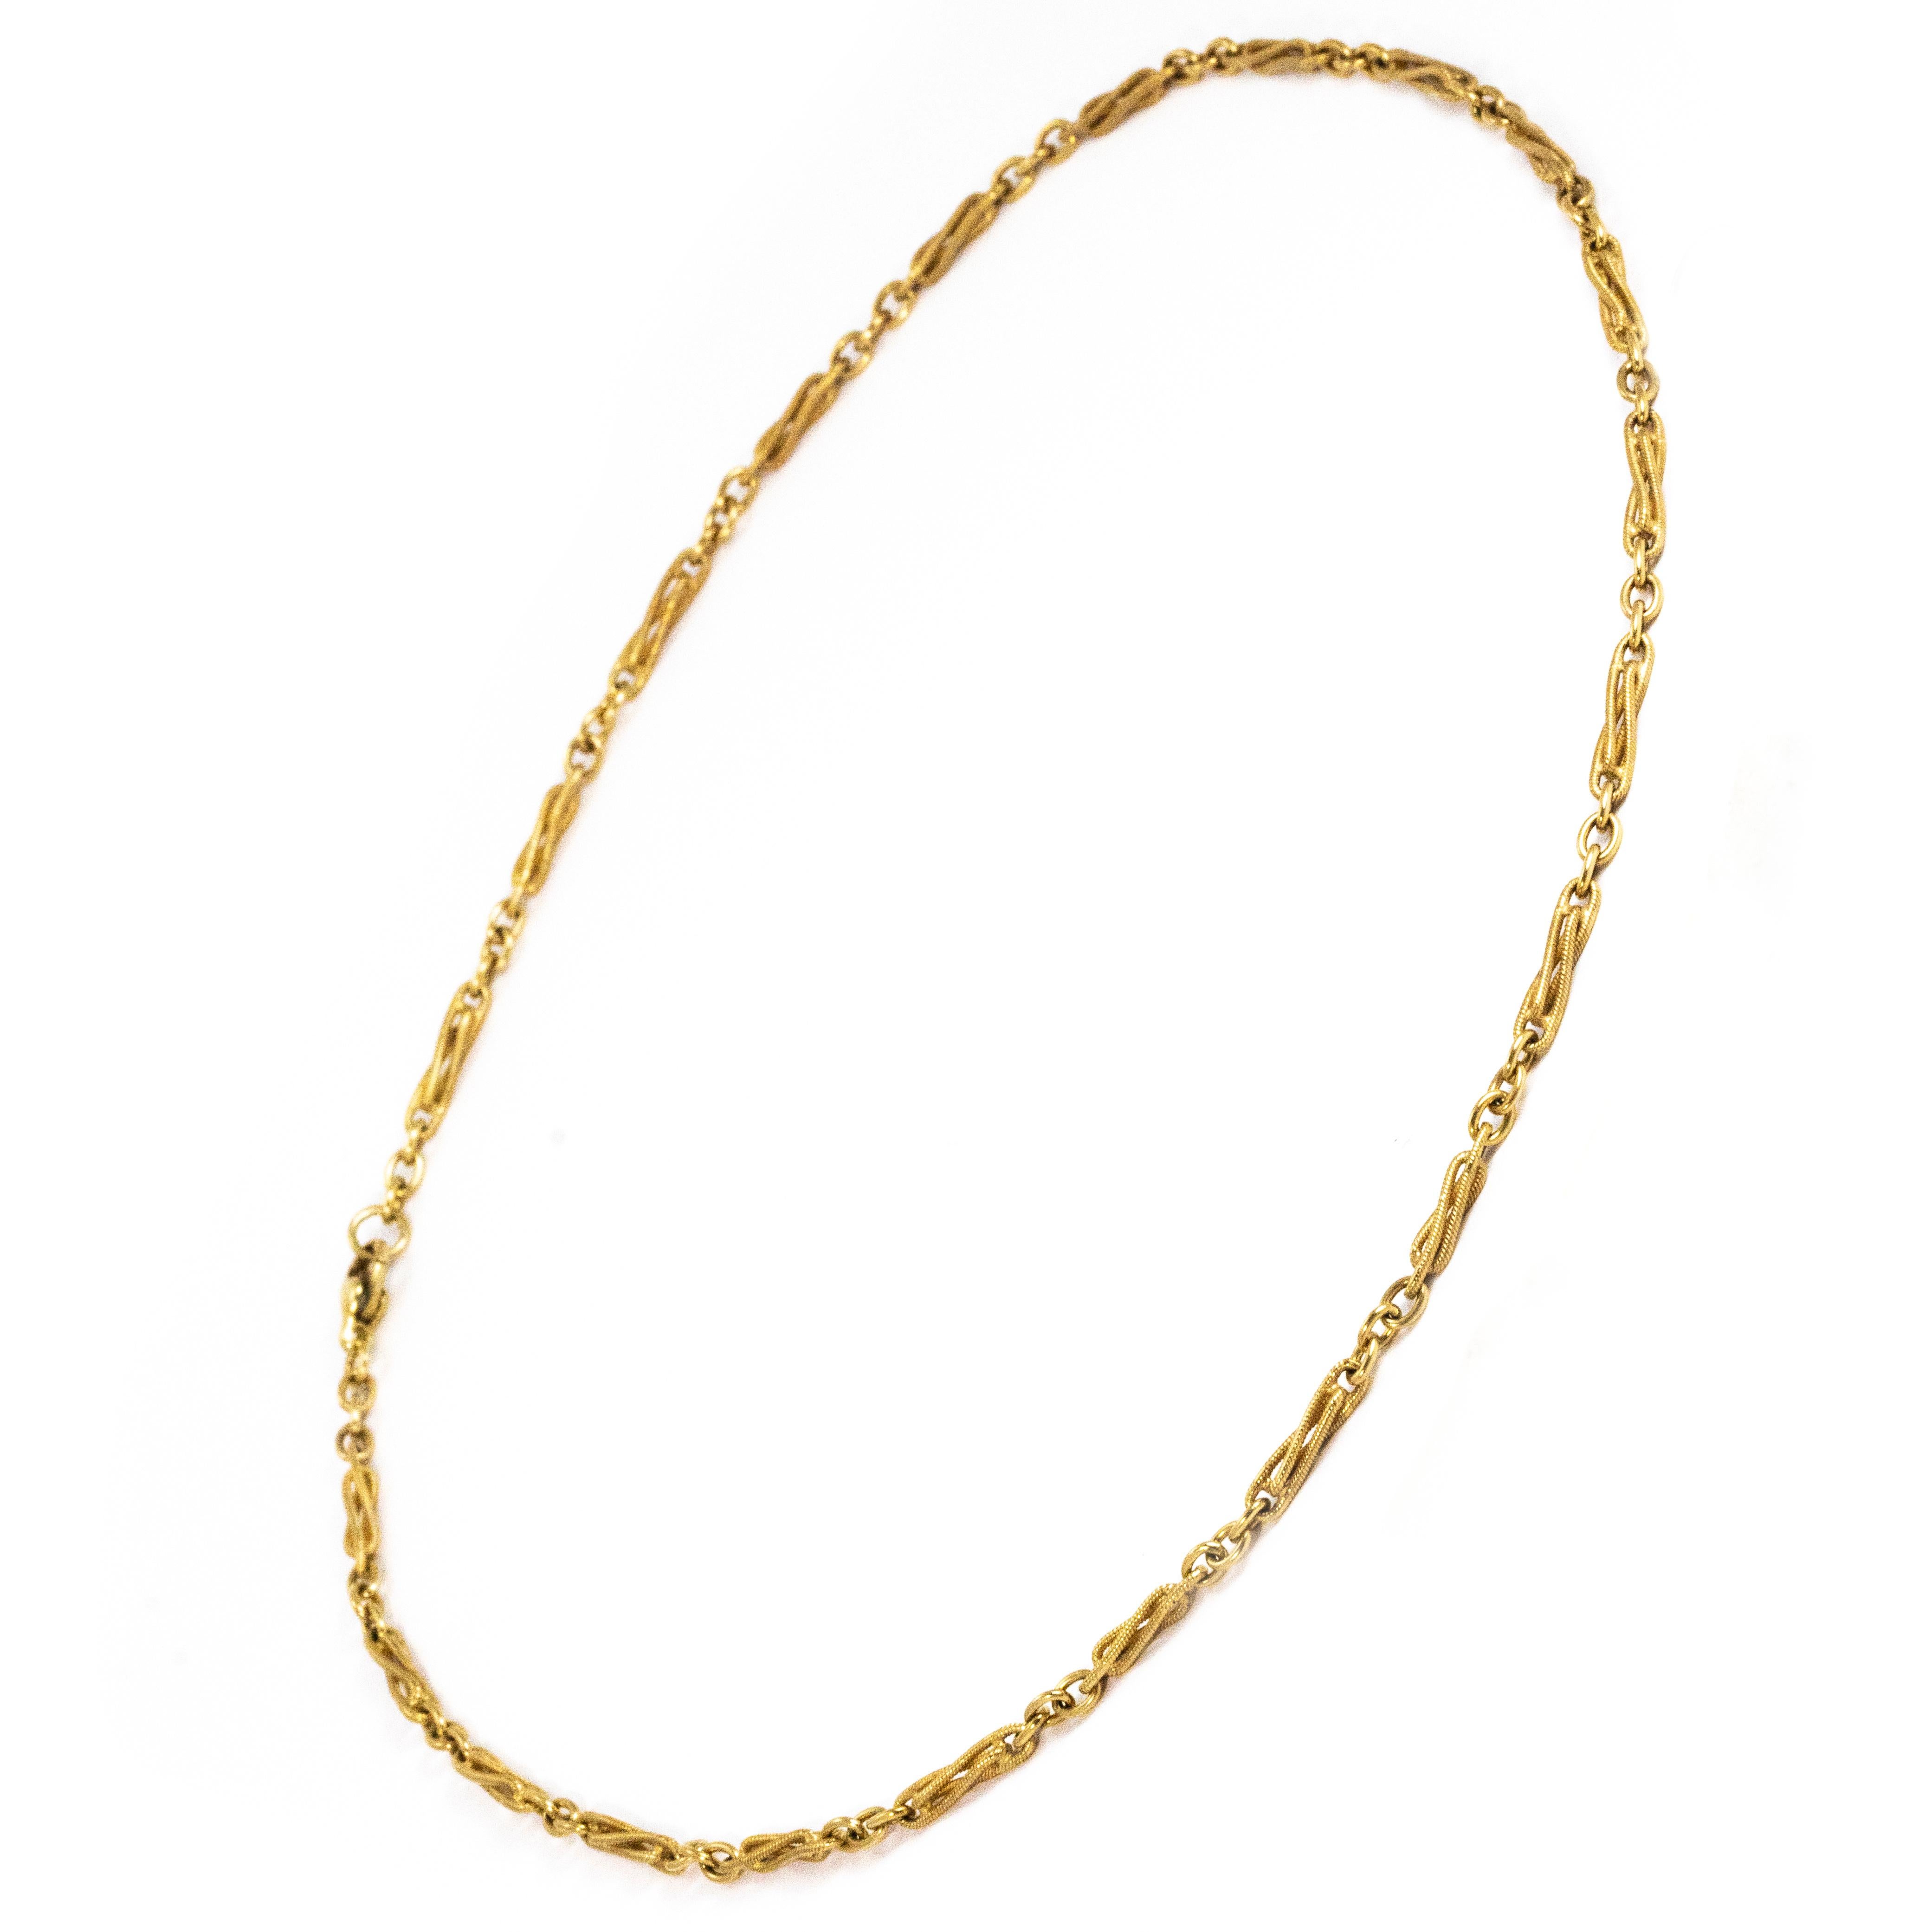 9 carat gold necklace